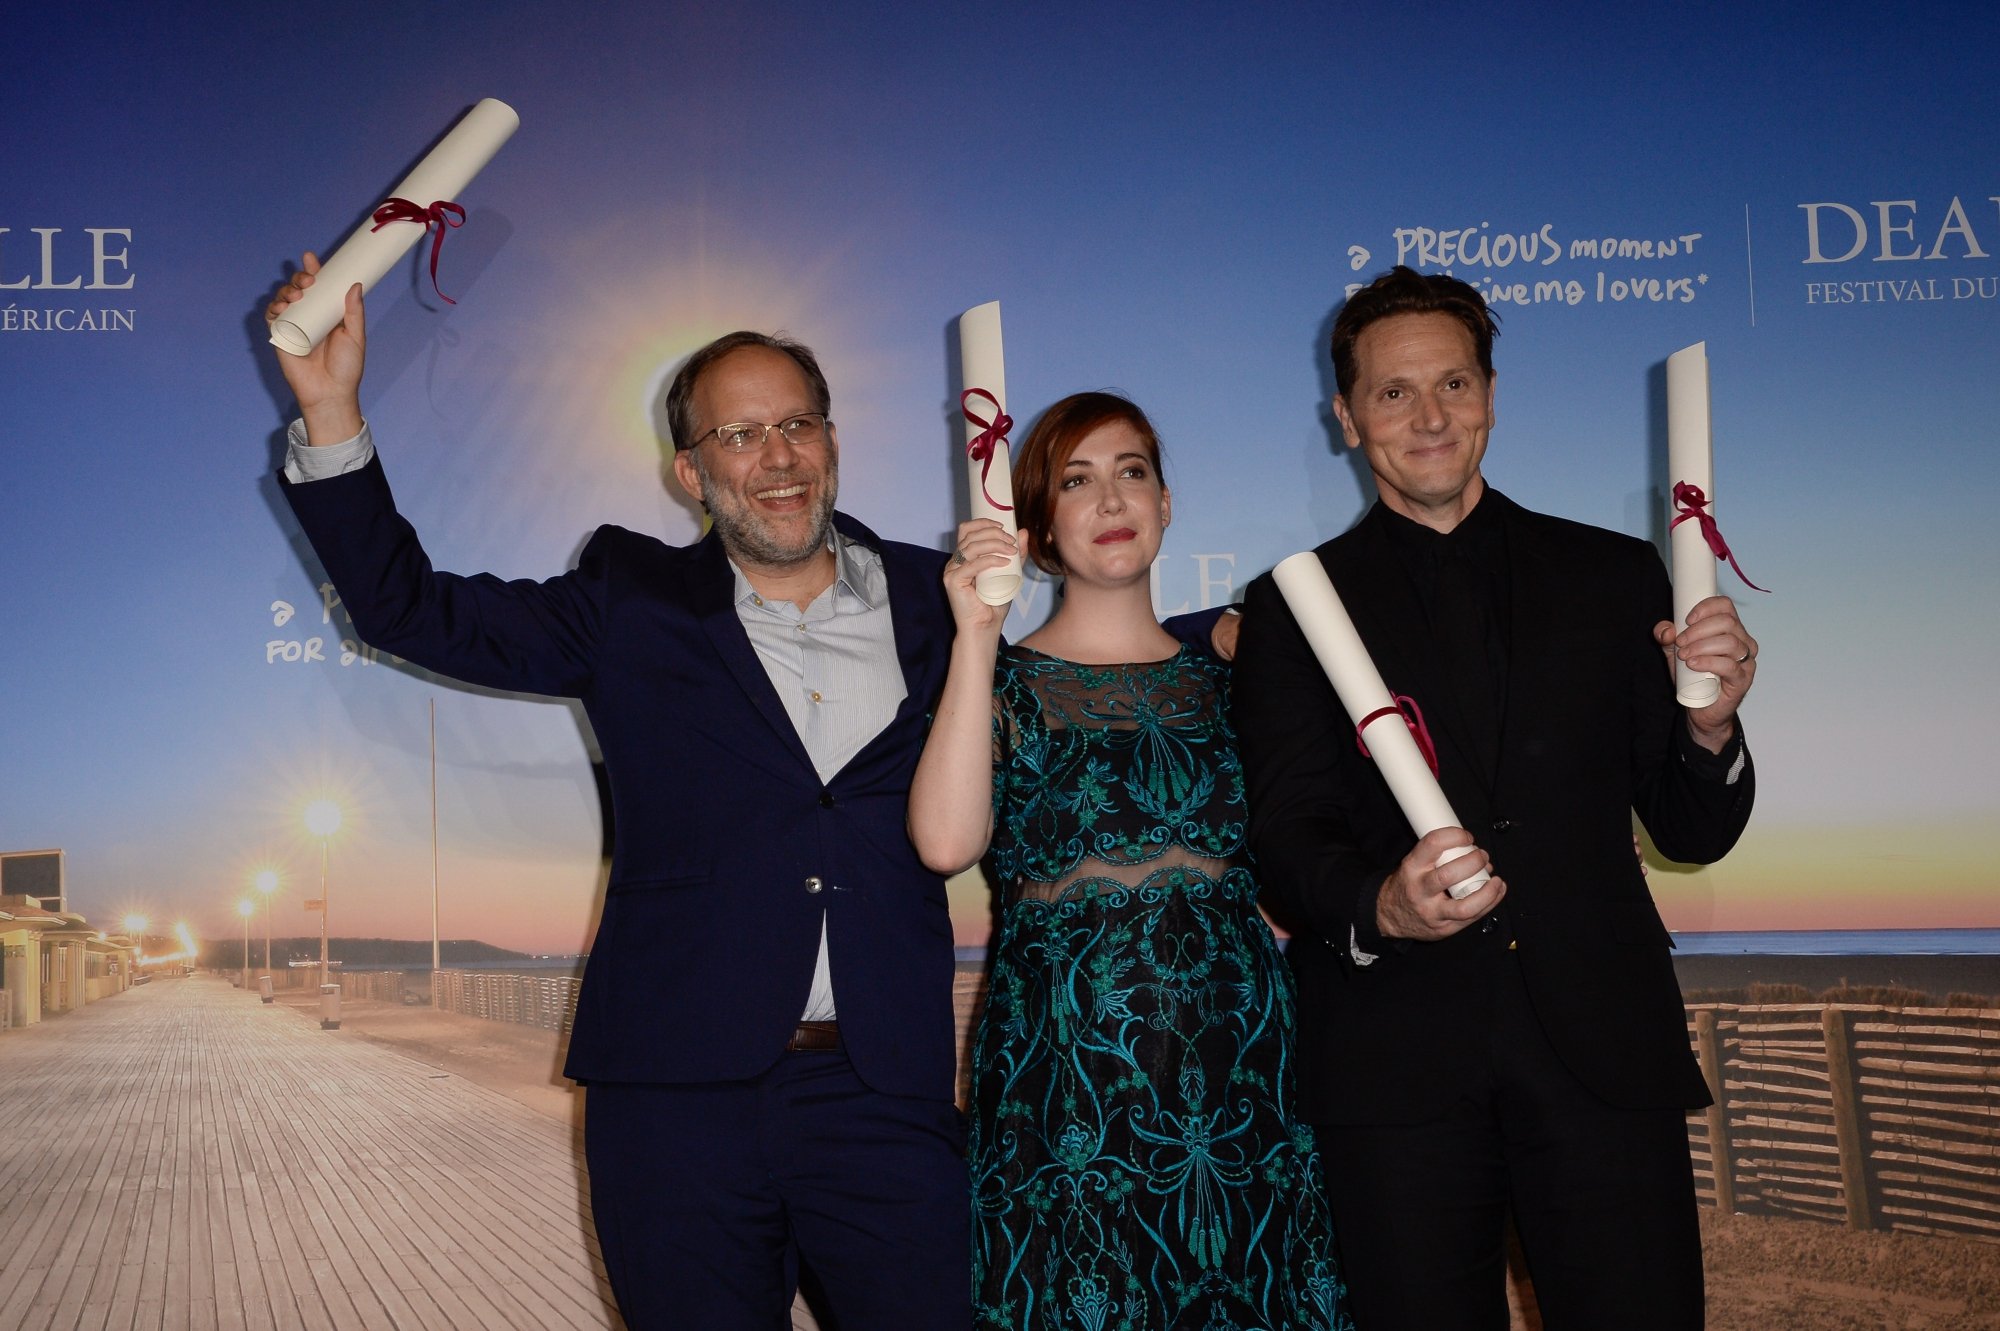 Ira Sachs, Anna Rose Holmer et Matt Ross, le trio gagnant du Festival de Deauville 2016.